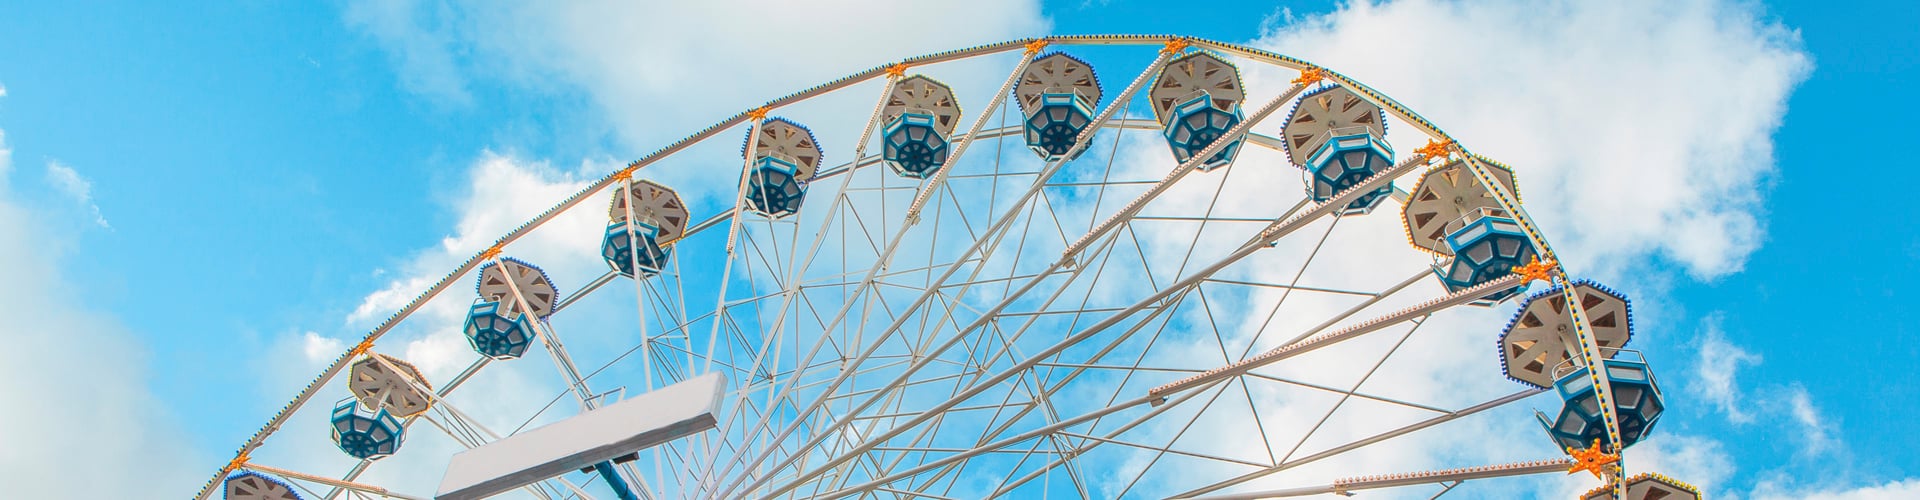 Colorful ferris wheel in an amusement park against blue sky